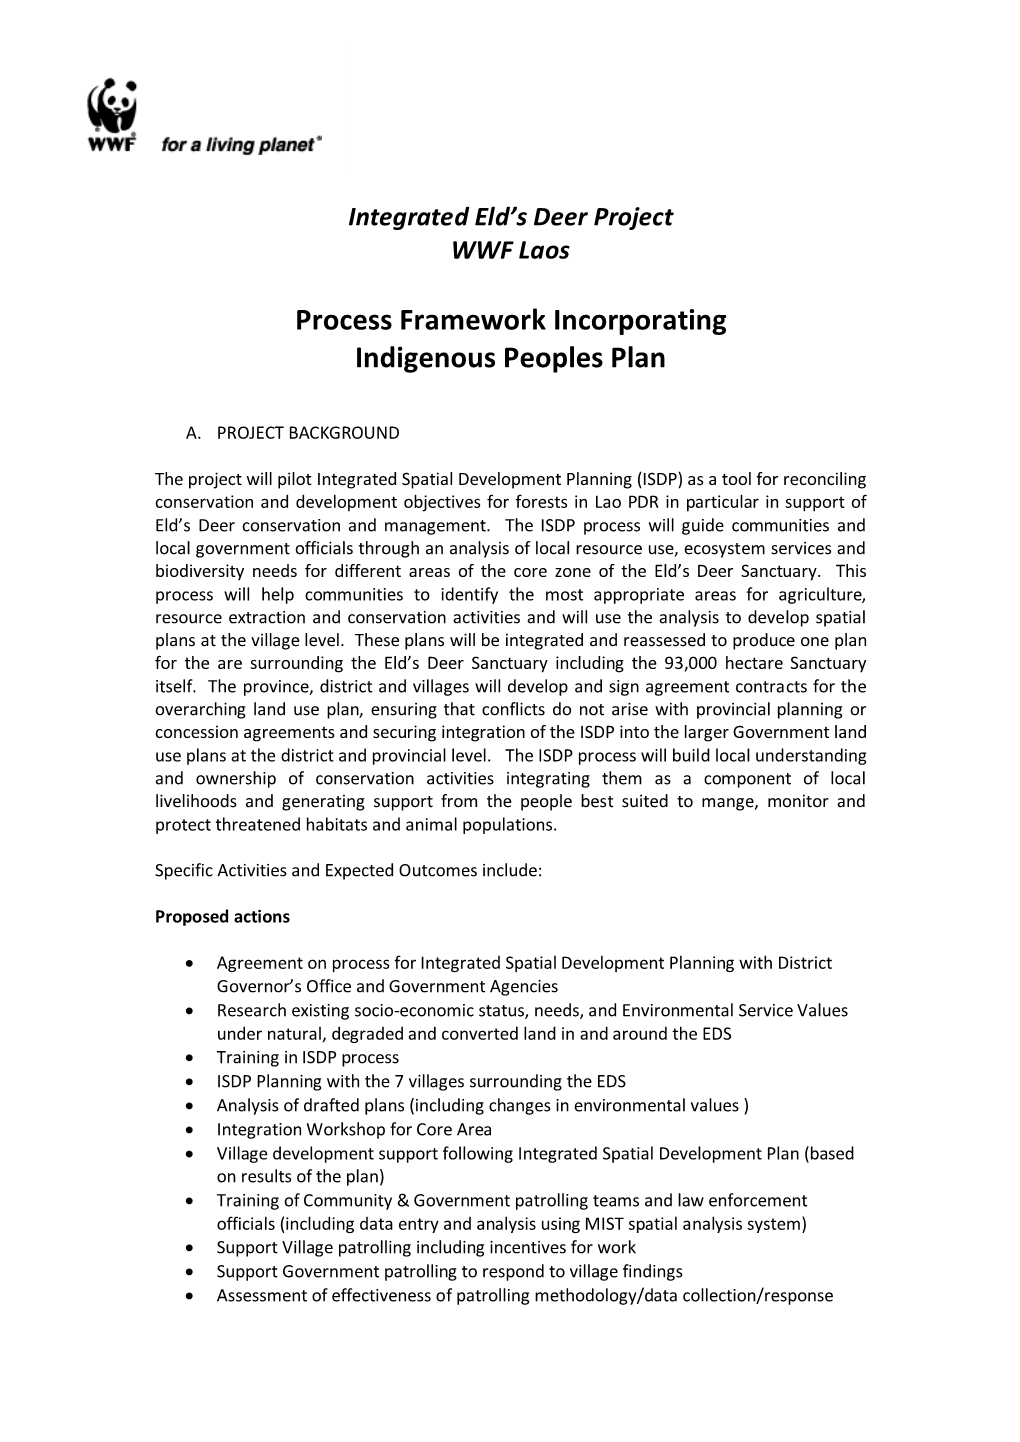 Process Framework Incorporating Indigenous Peoples Plan